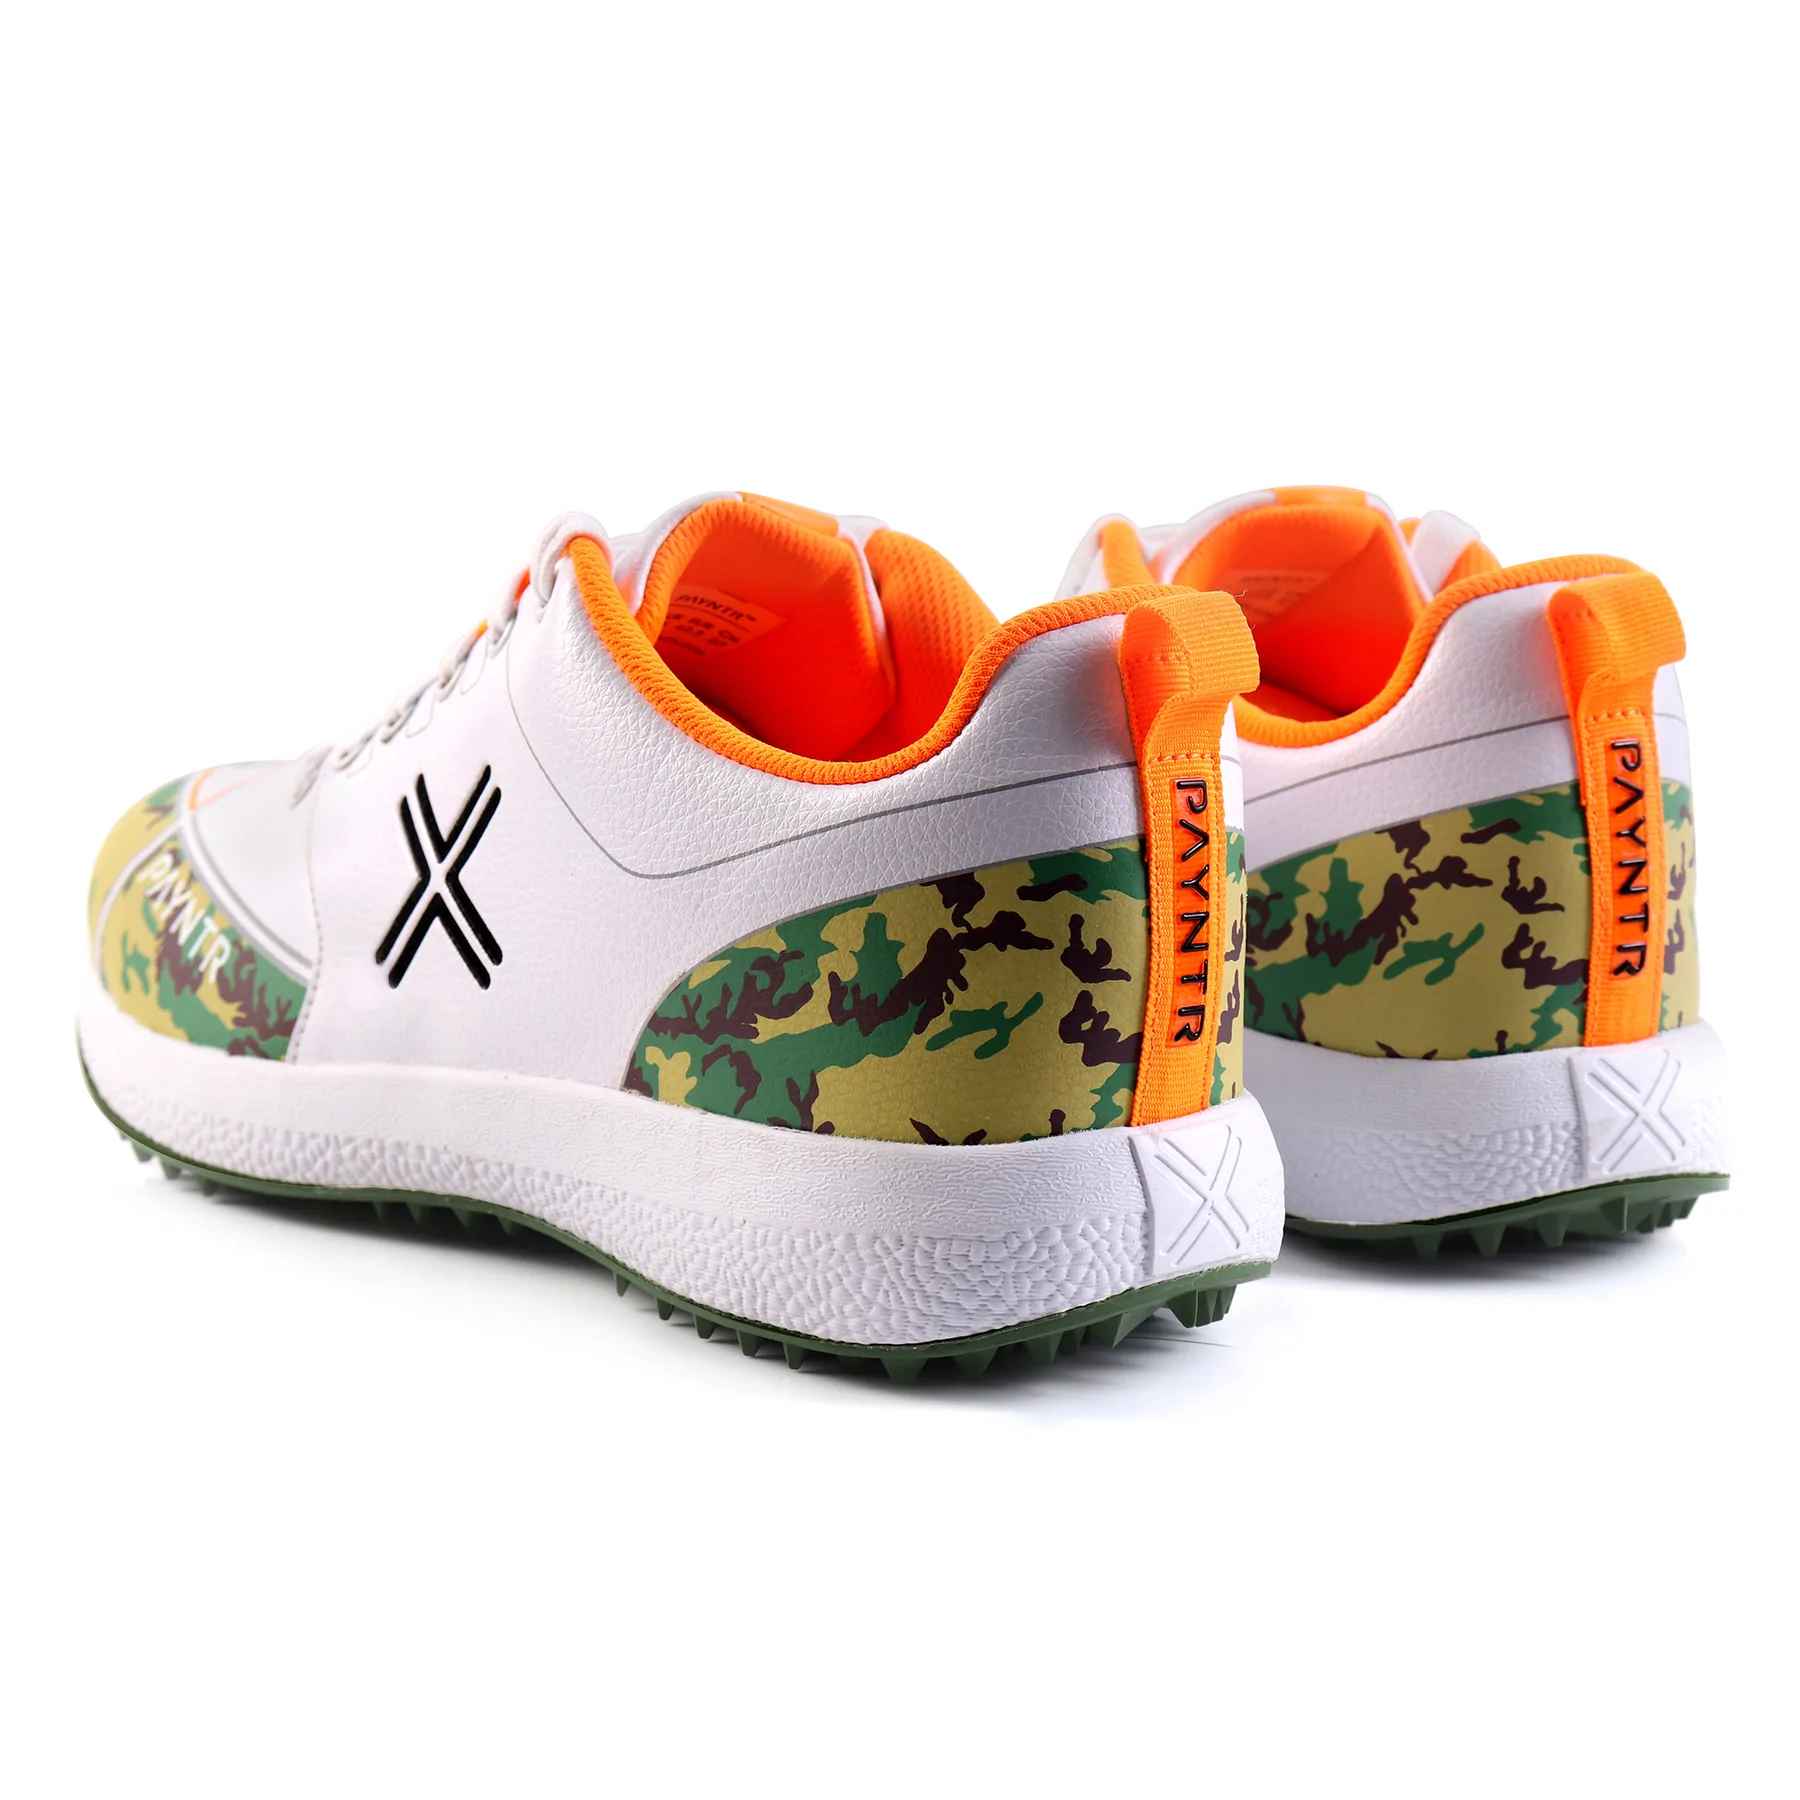 PAYNTR X RUBBER Cricket Shoes – Camo/Orange/Black